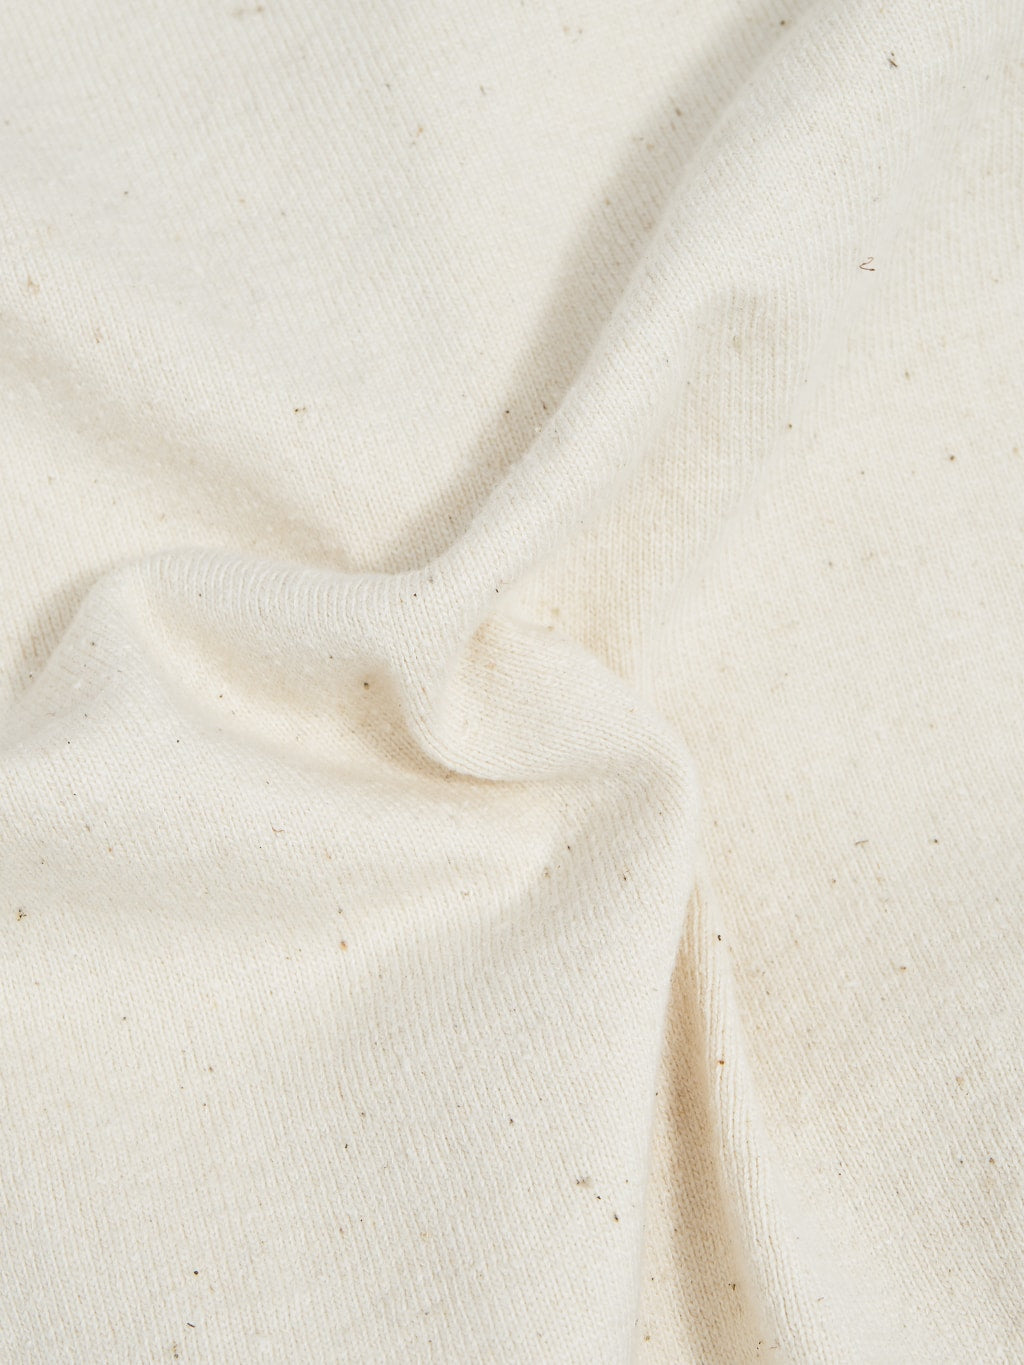 Samurai jeans japanese long sleeve tshirt natural cotton texture